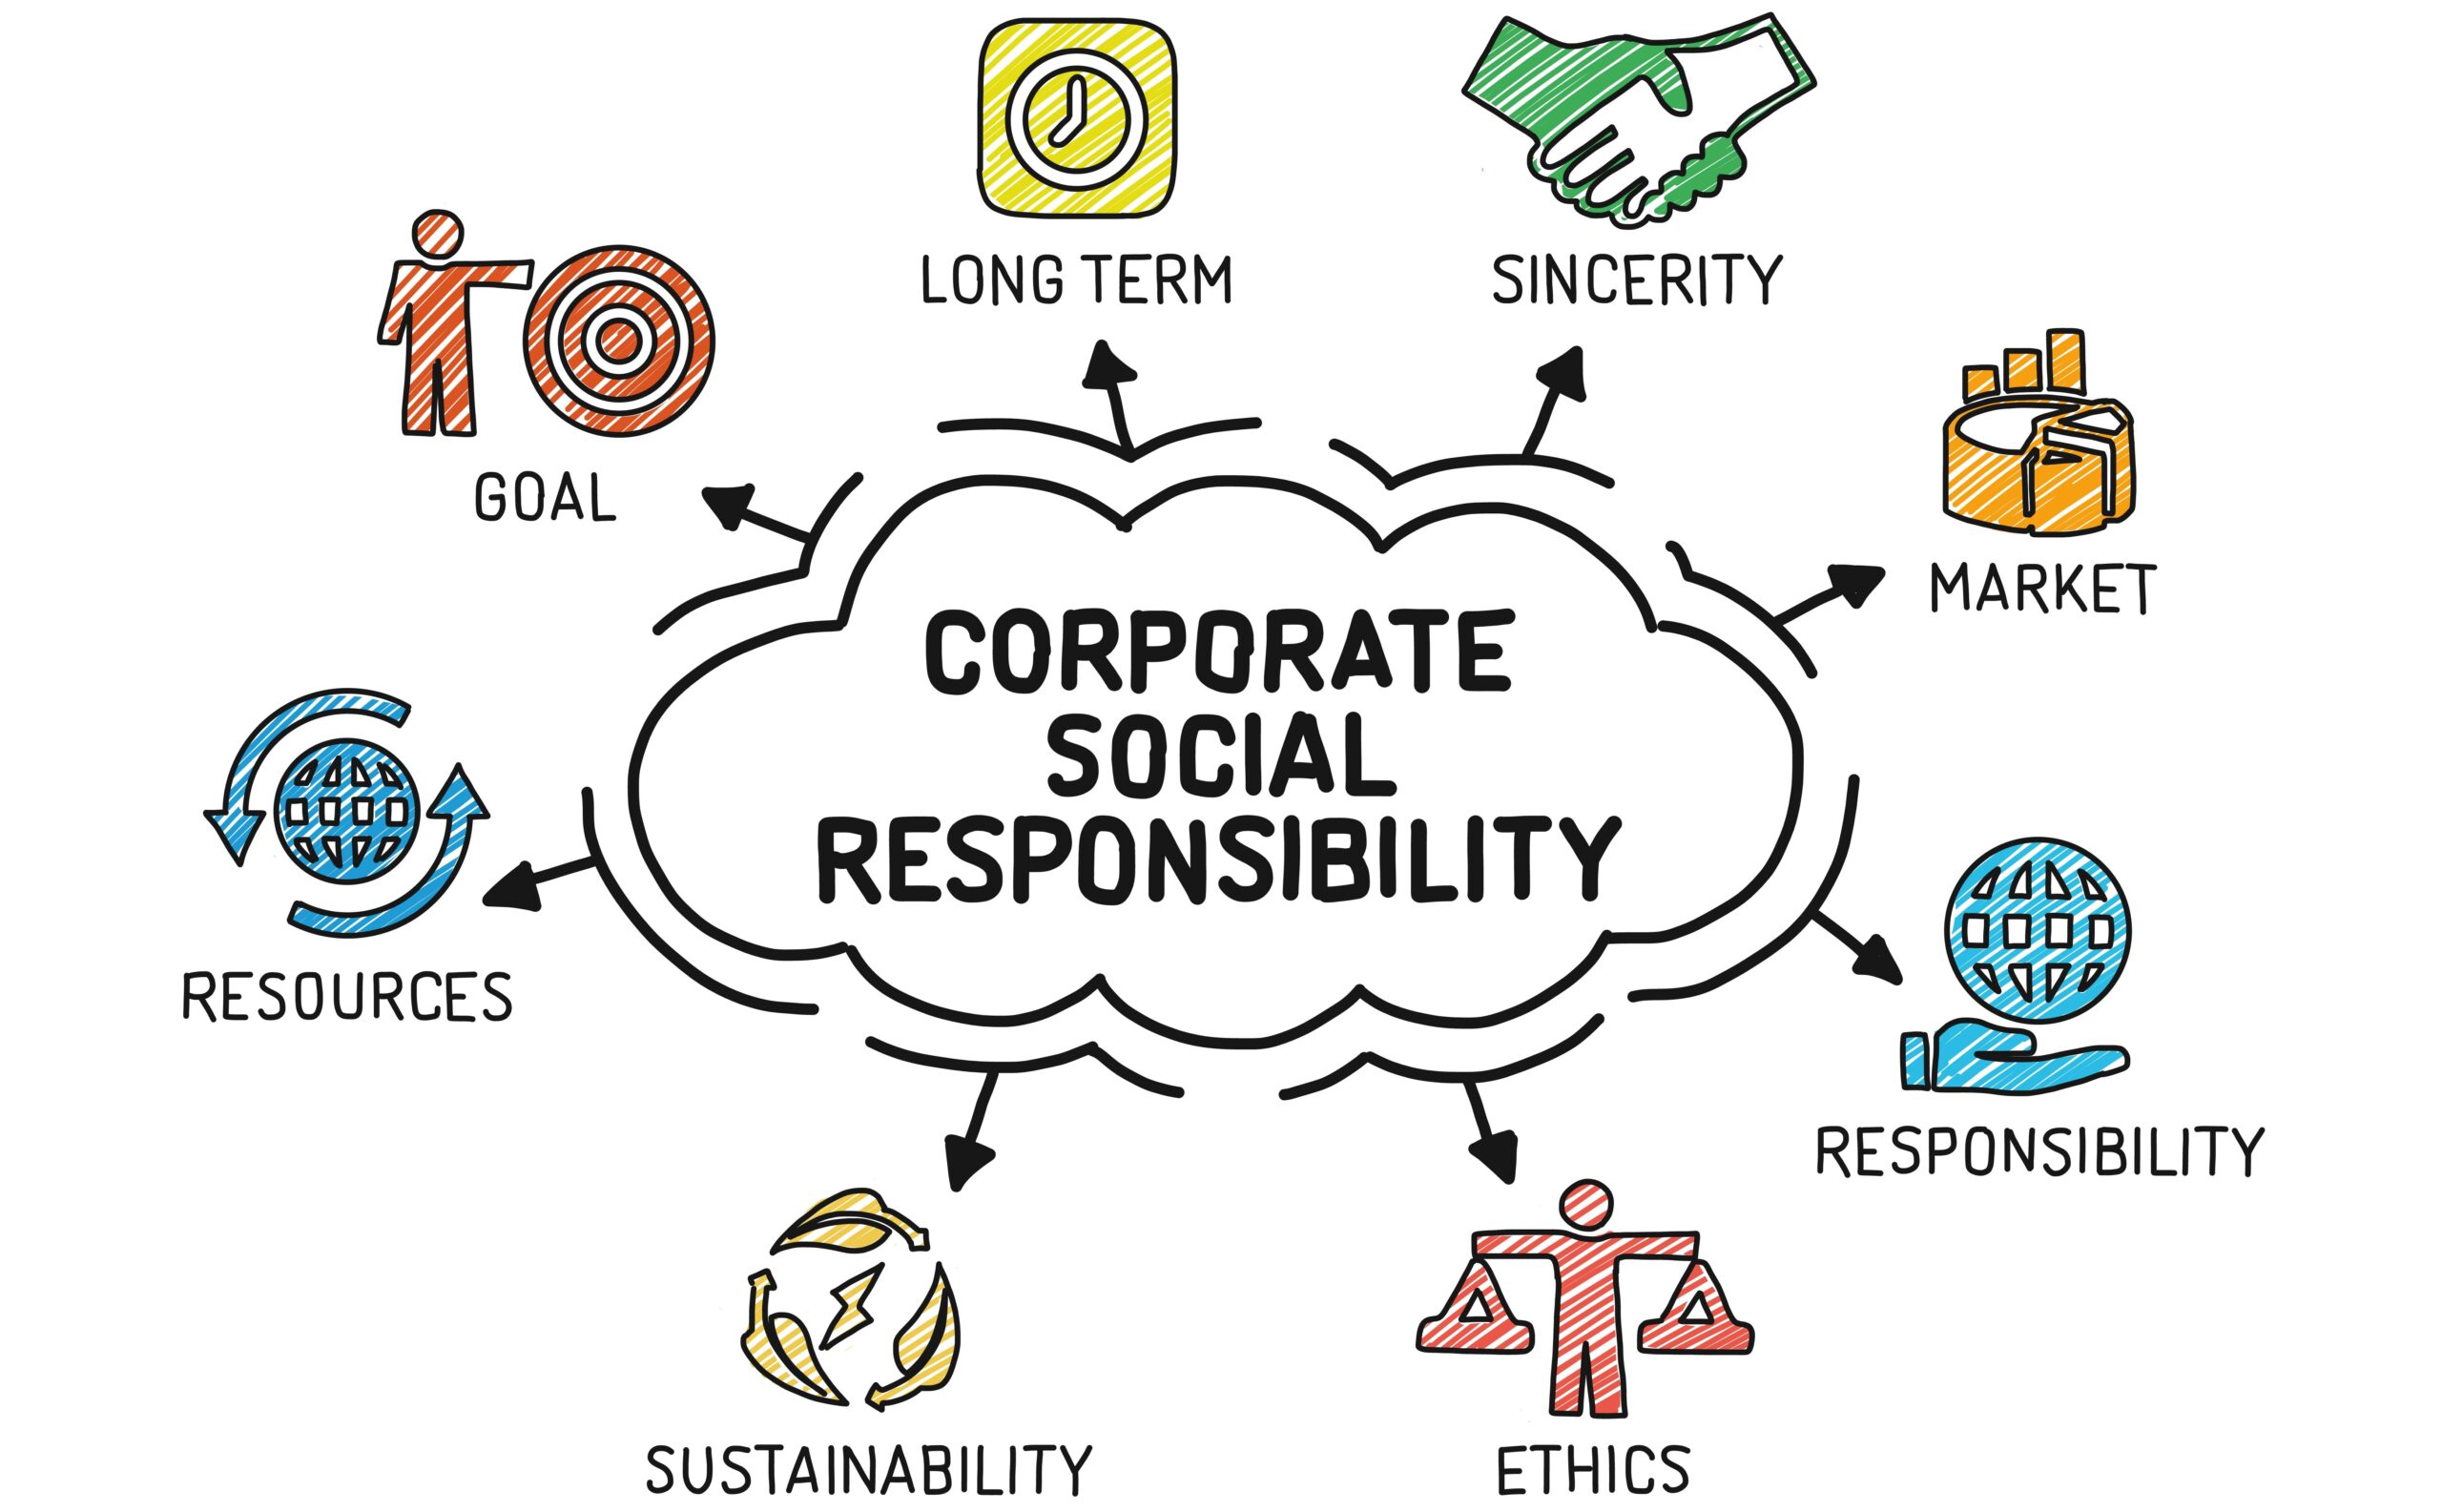 Skee: Corporate Social Responsibility